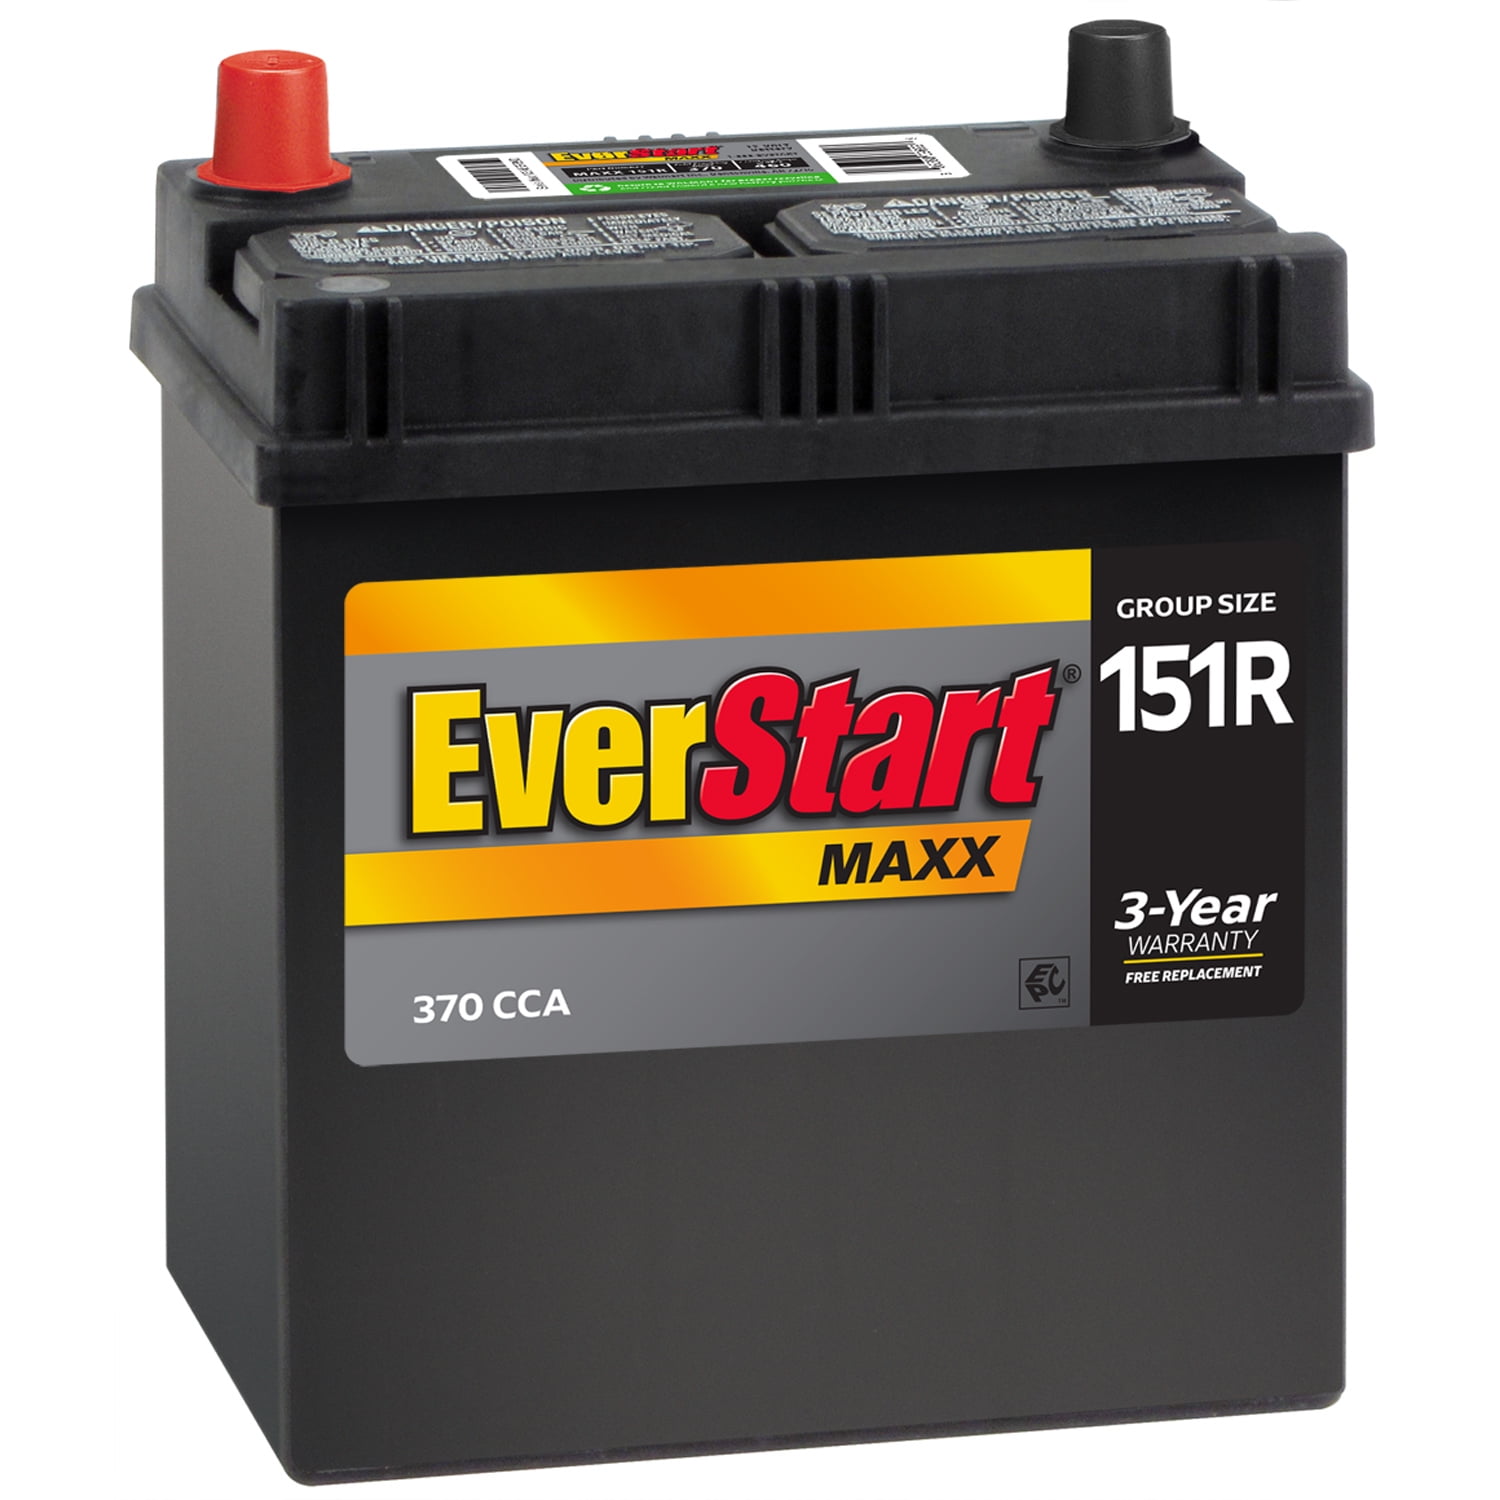 EverStart Maxx Lead Acid Automotive Battery, Group Size 151R (12 Volt / 370 CCA)